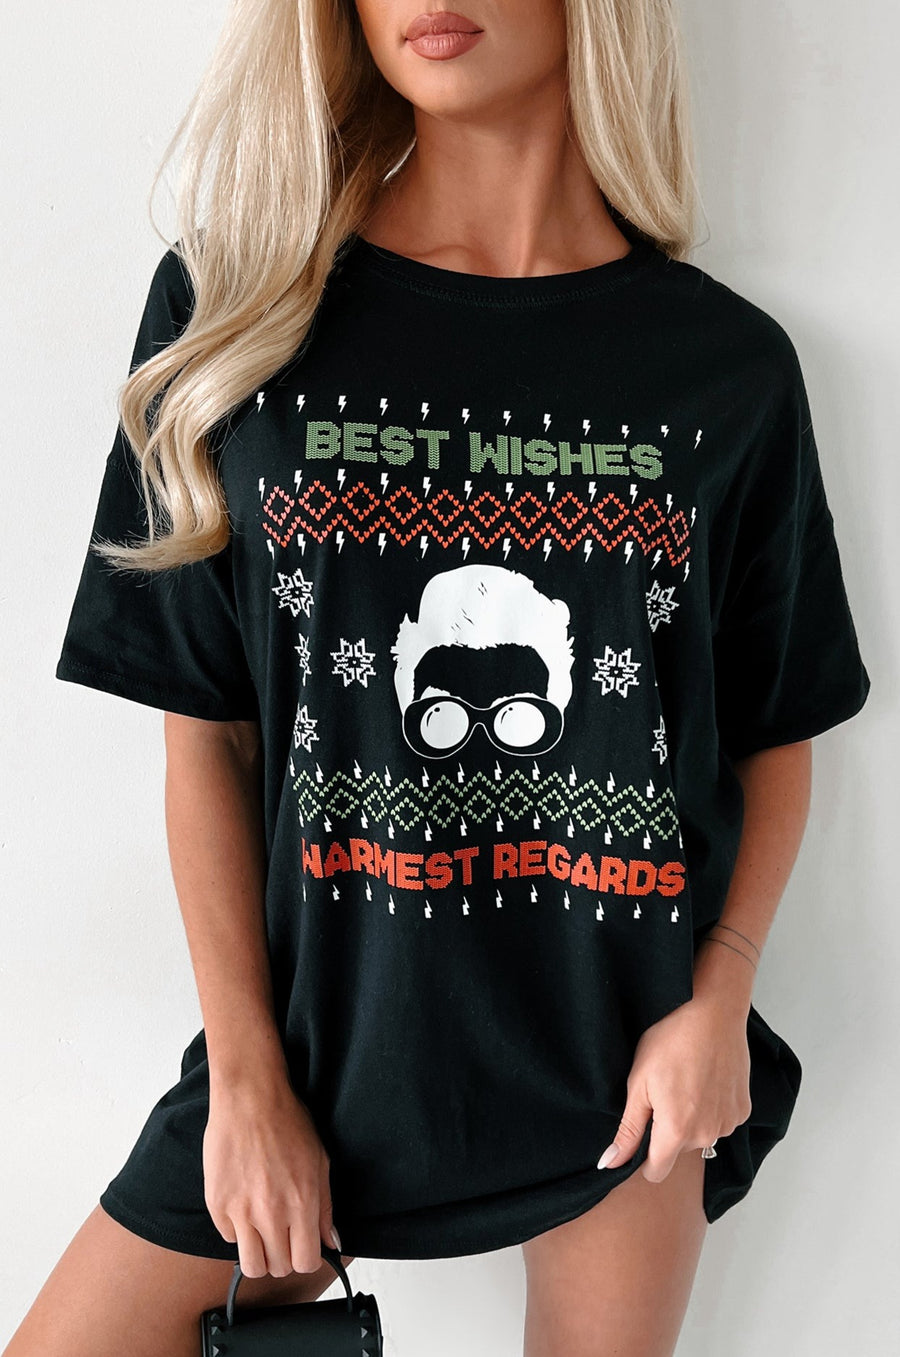 Doorbuster "Best Wishes, Warmest Regards" Oversized Graphic T-Shirt Dress (Black) - Print On Demand - NanaMacs